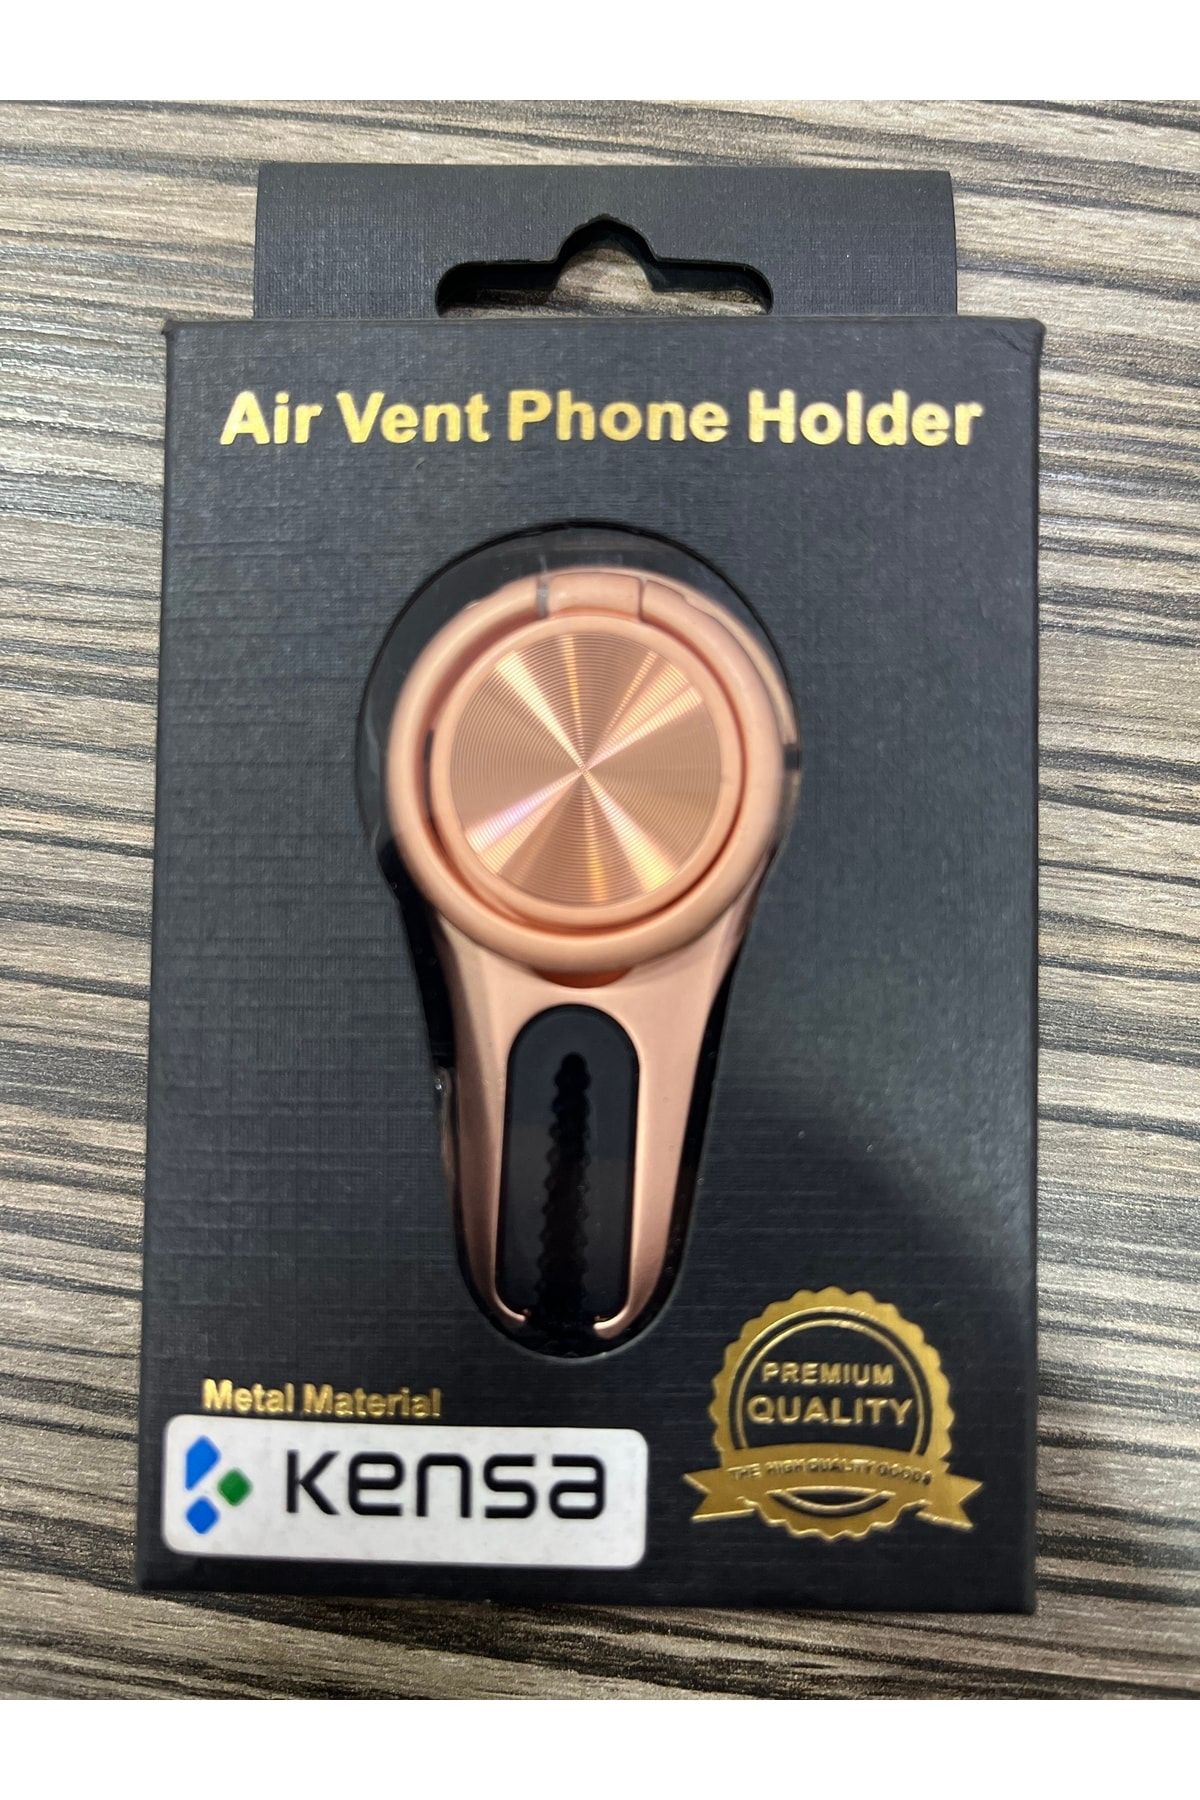 Kensa Air Vent Phone Holder